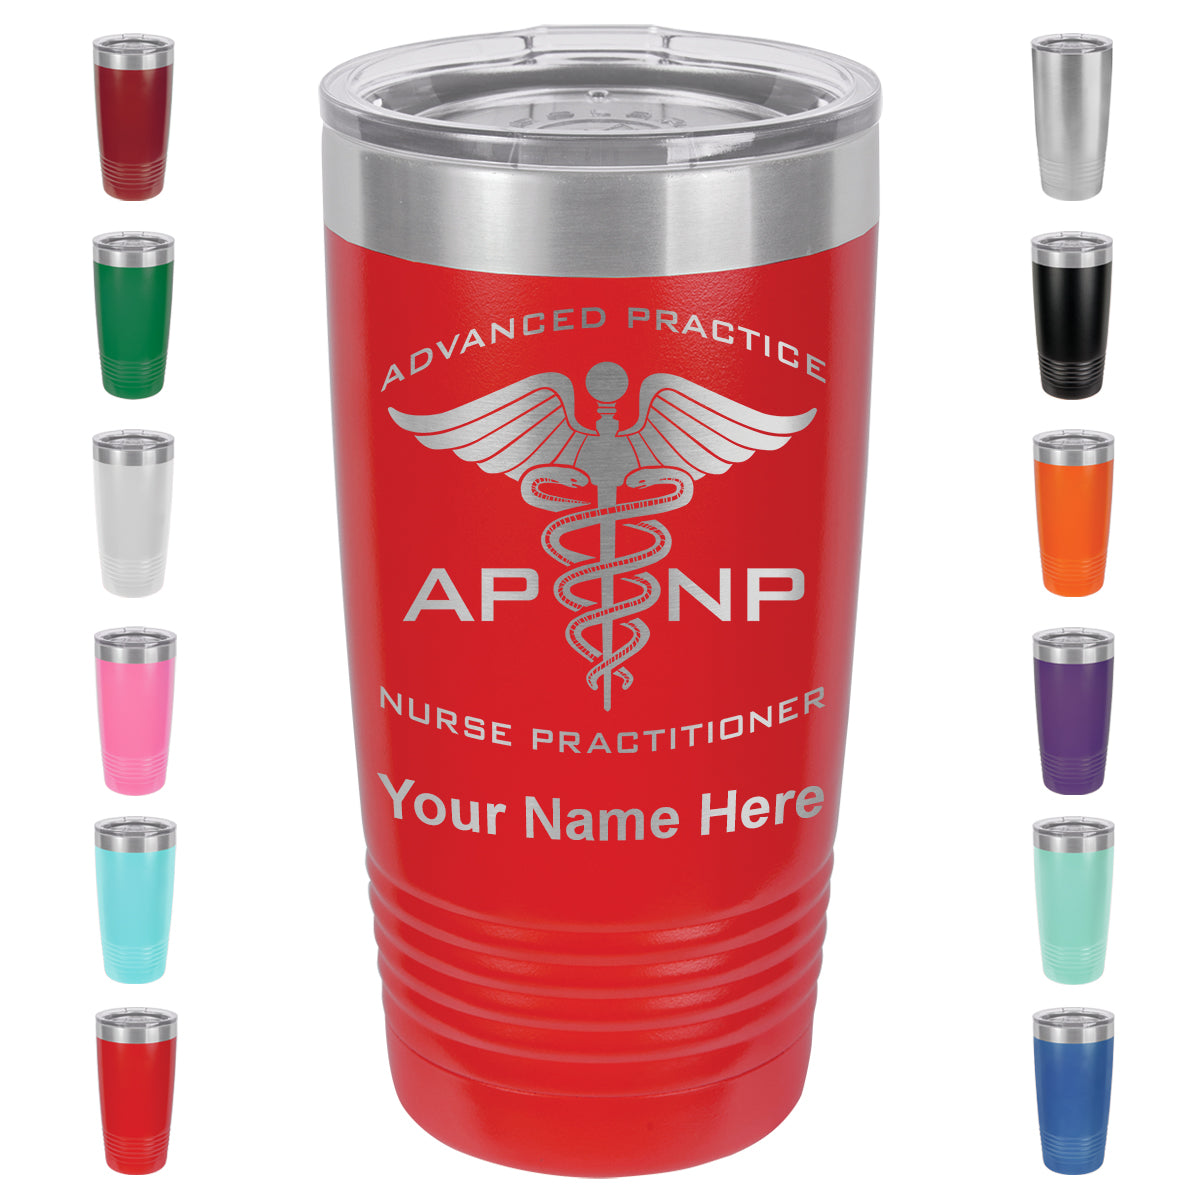 20oz Vacuum Insulated Tumbler Mug, APNP Advanced Practice Nurse Practitioner, Personalized Engraving Included